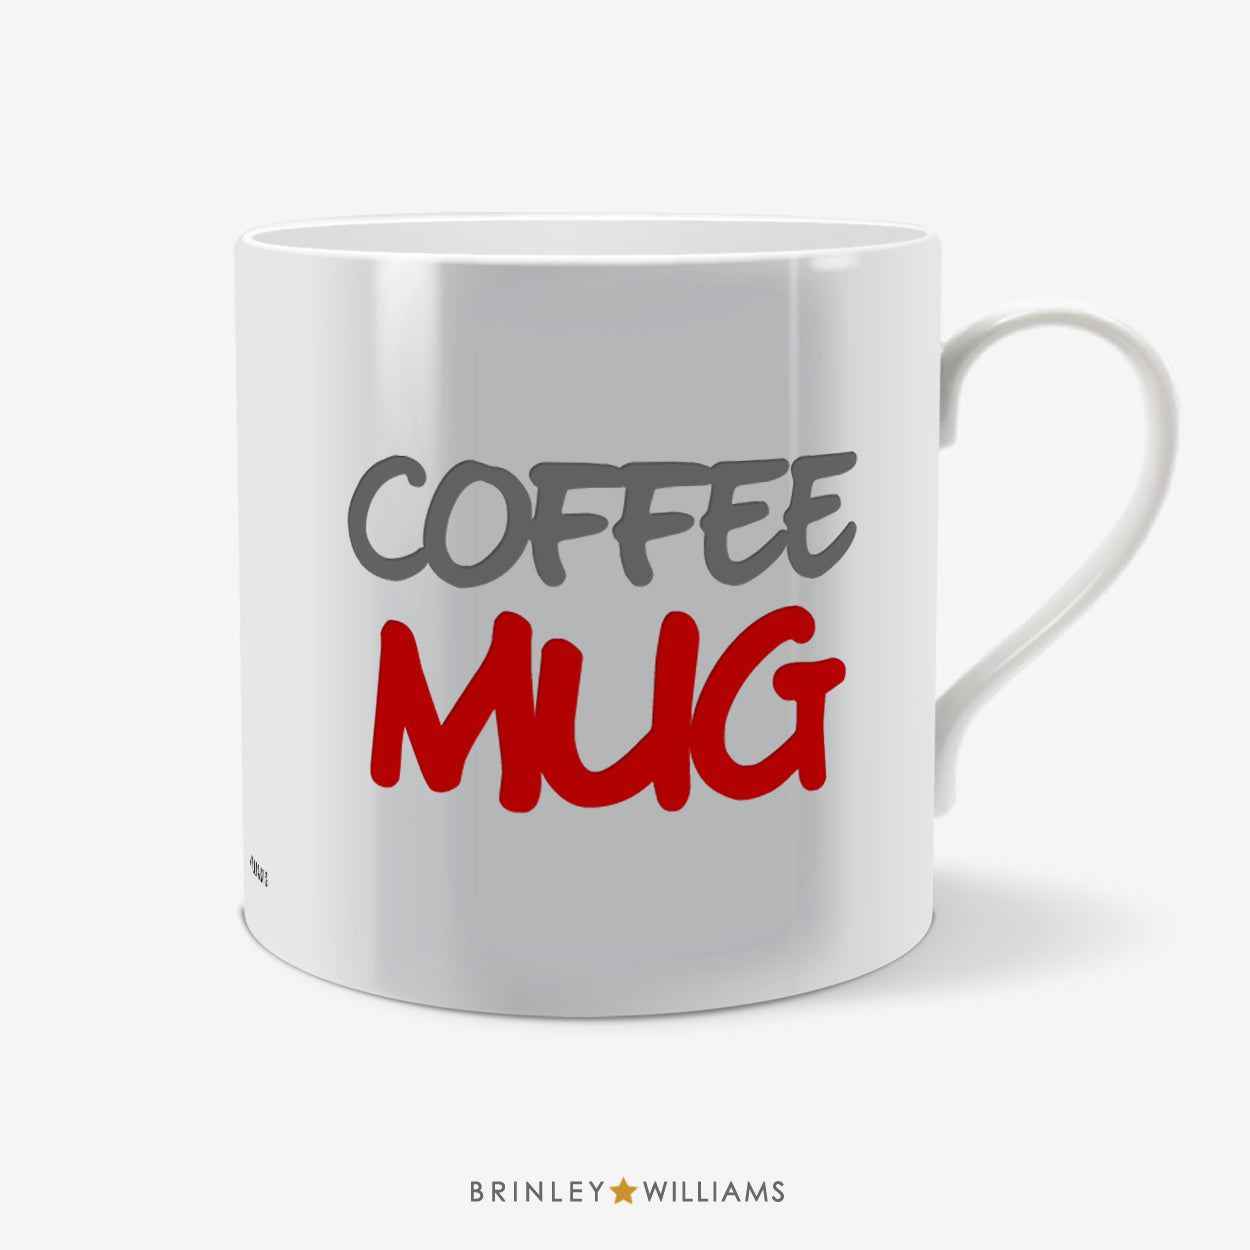 Coffee Mug Fun Mug - Red